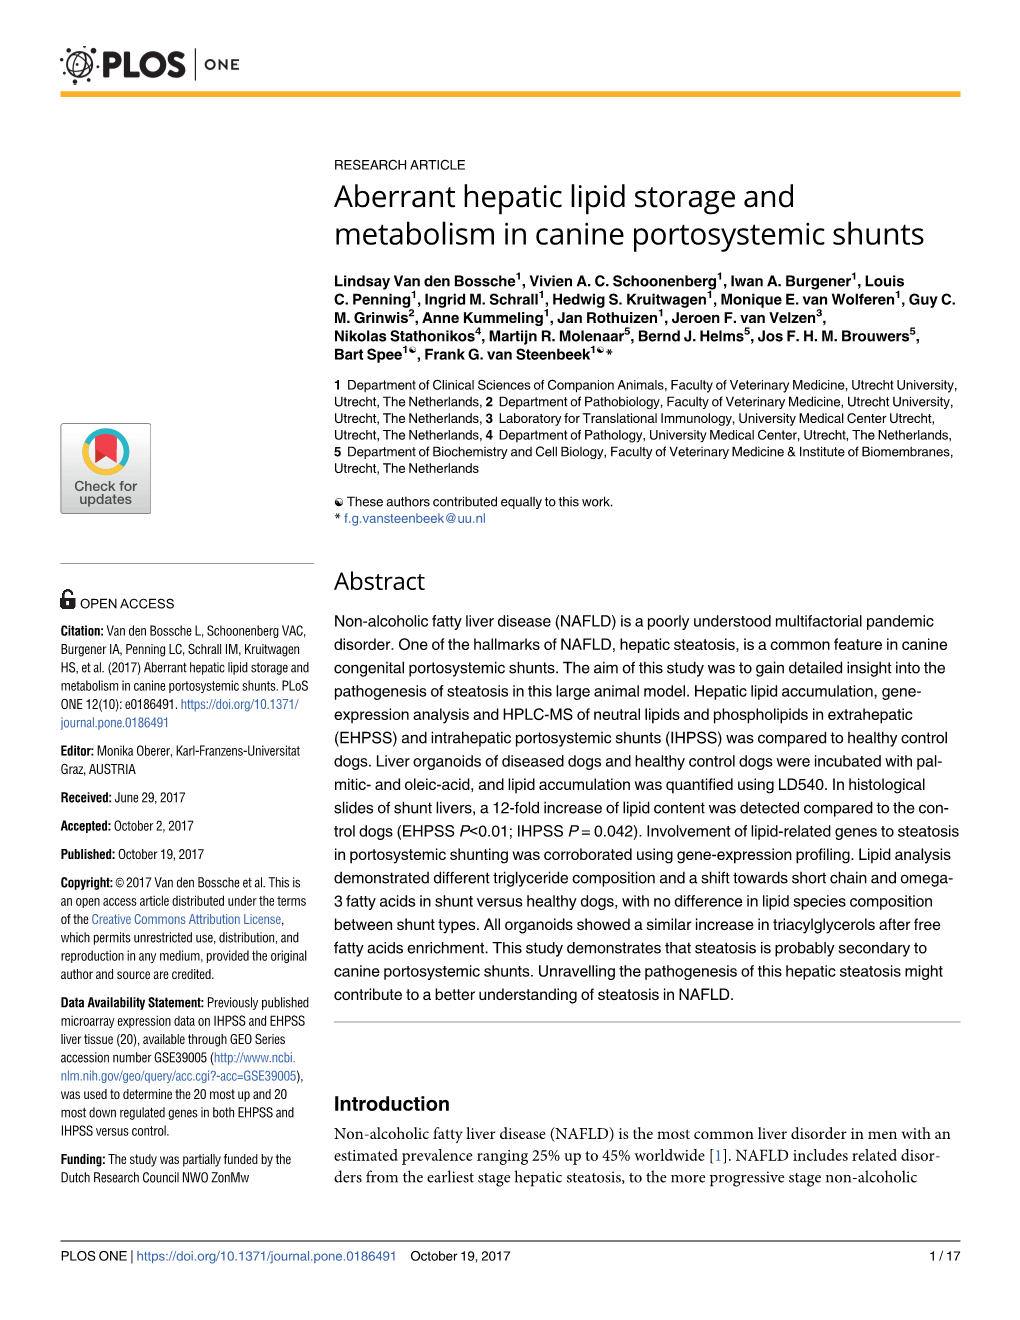 Aberrant Hepatic Lipid Storage and Metabolism in Canine Portosystemic Shunts